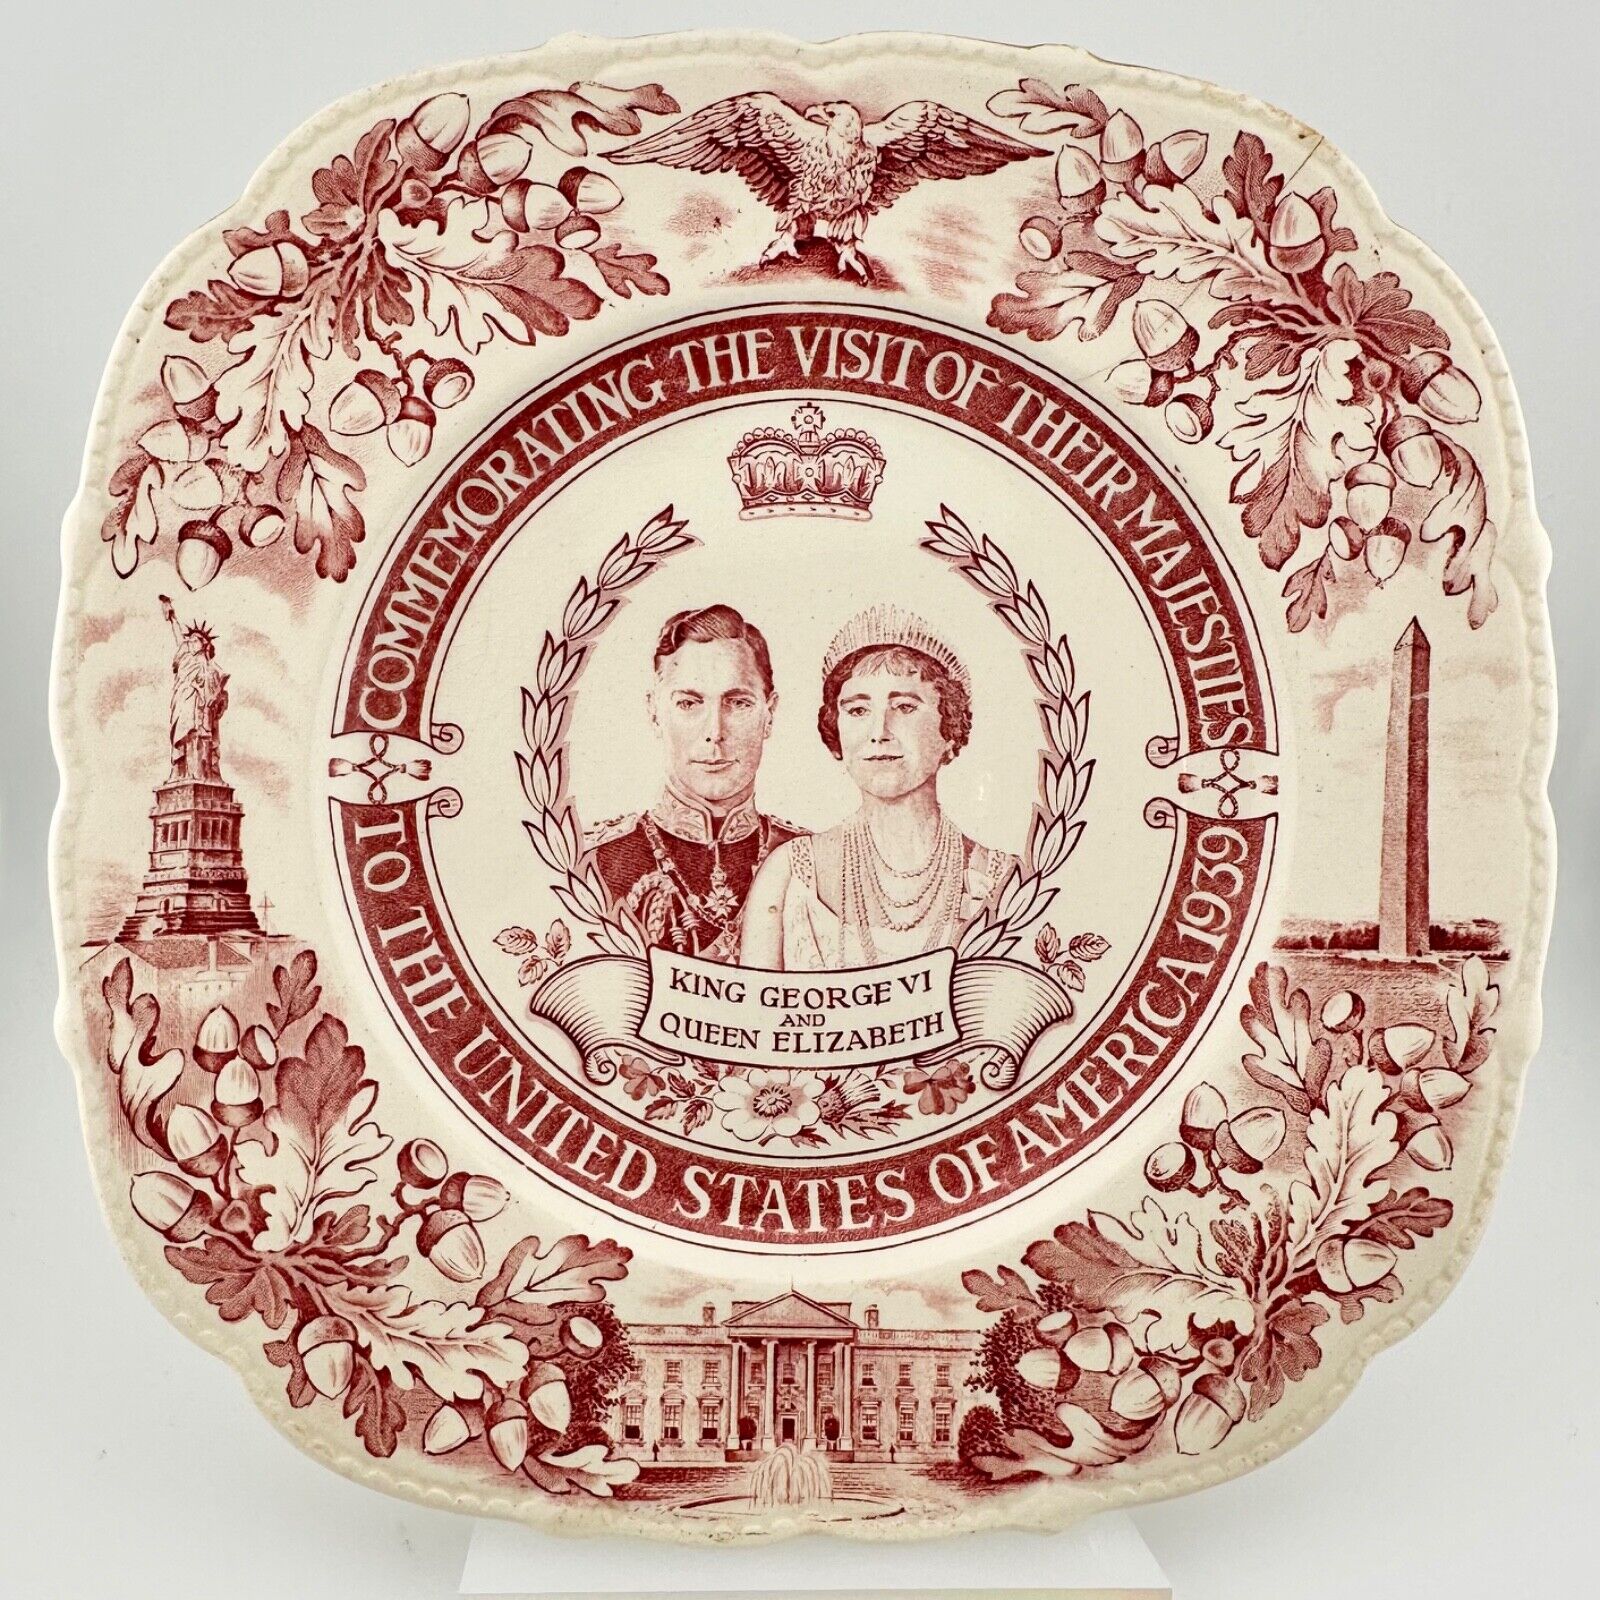 1939 King George VI Queen Elizabeth Canada Visit China Plate Vintage Antique